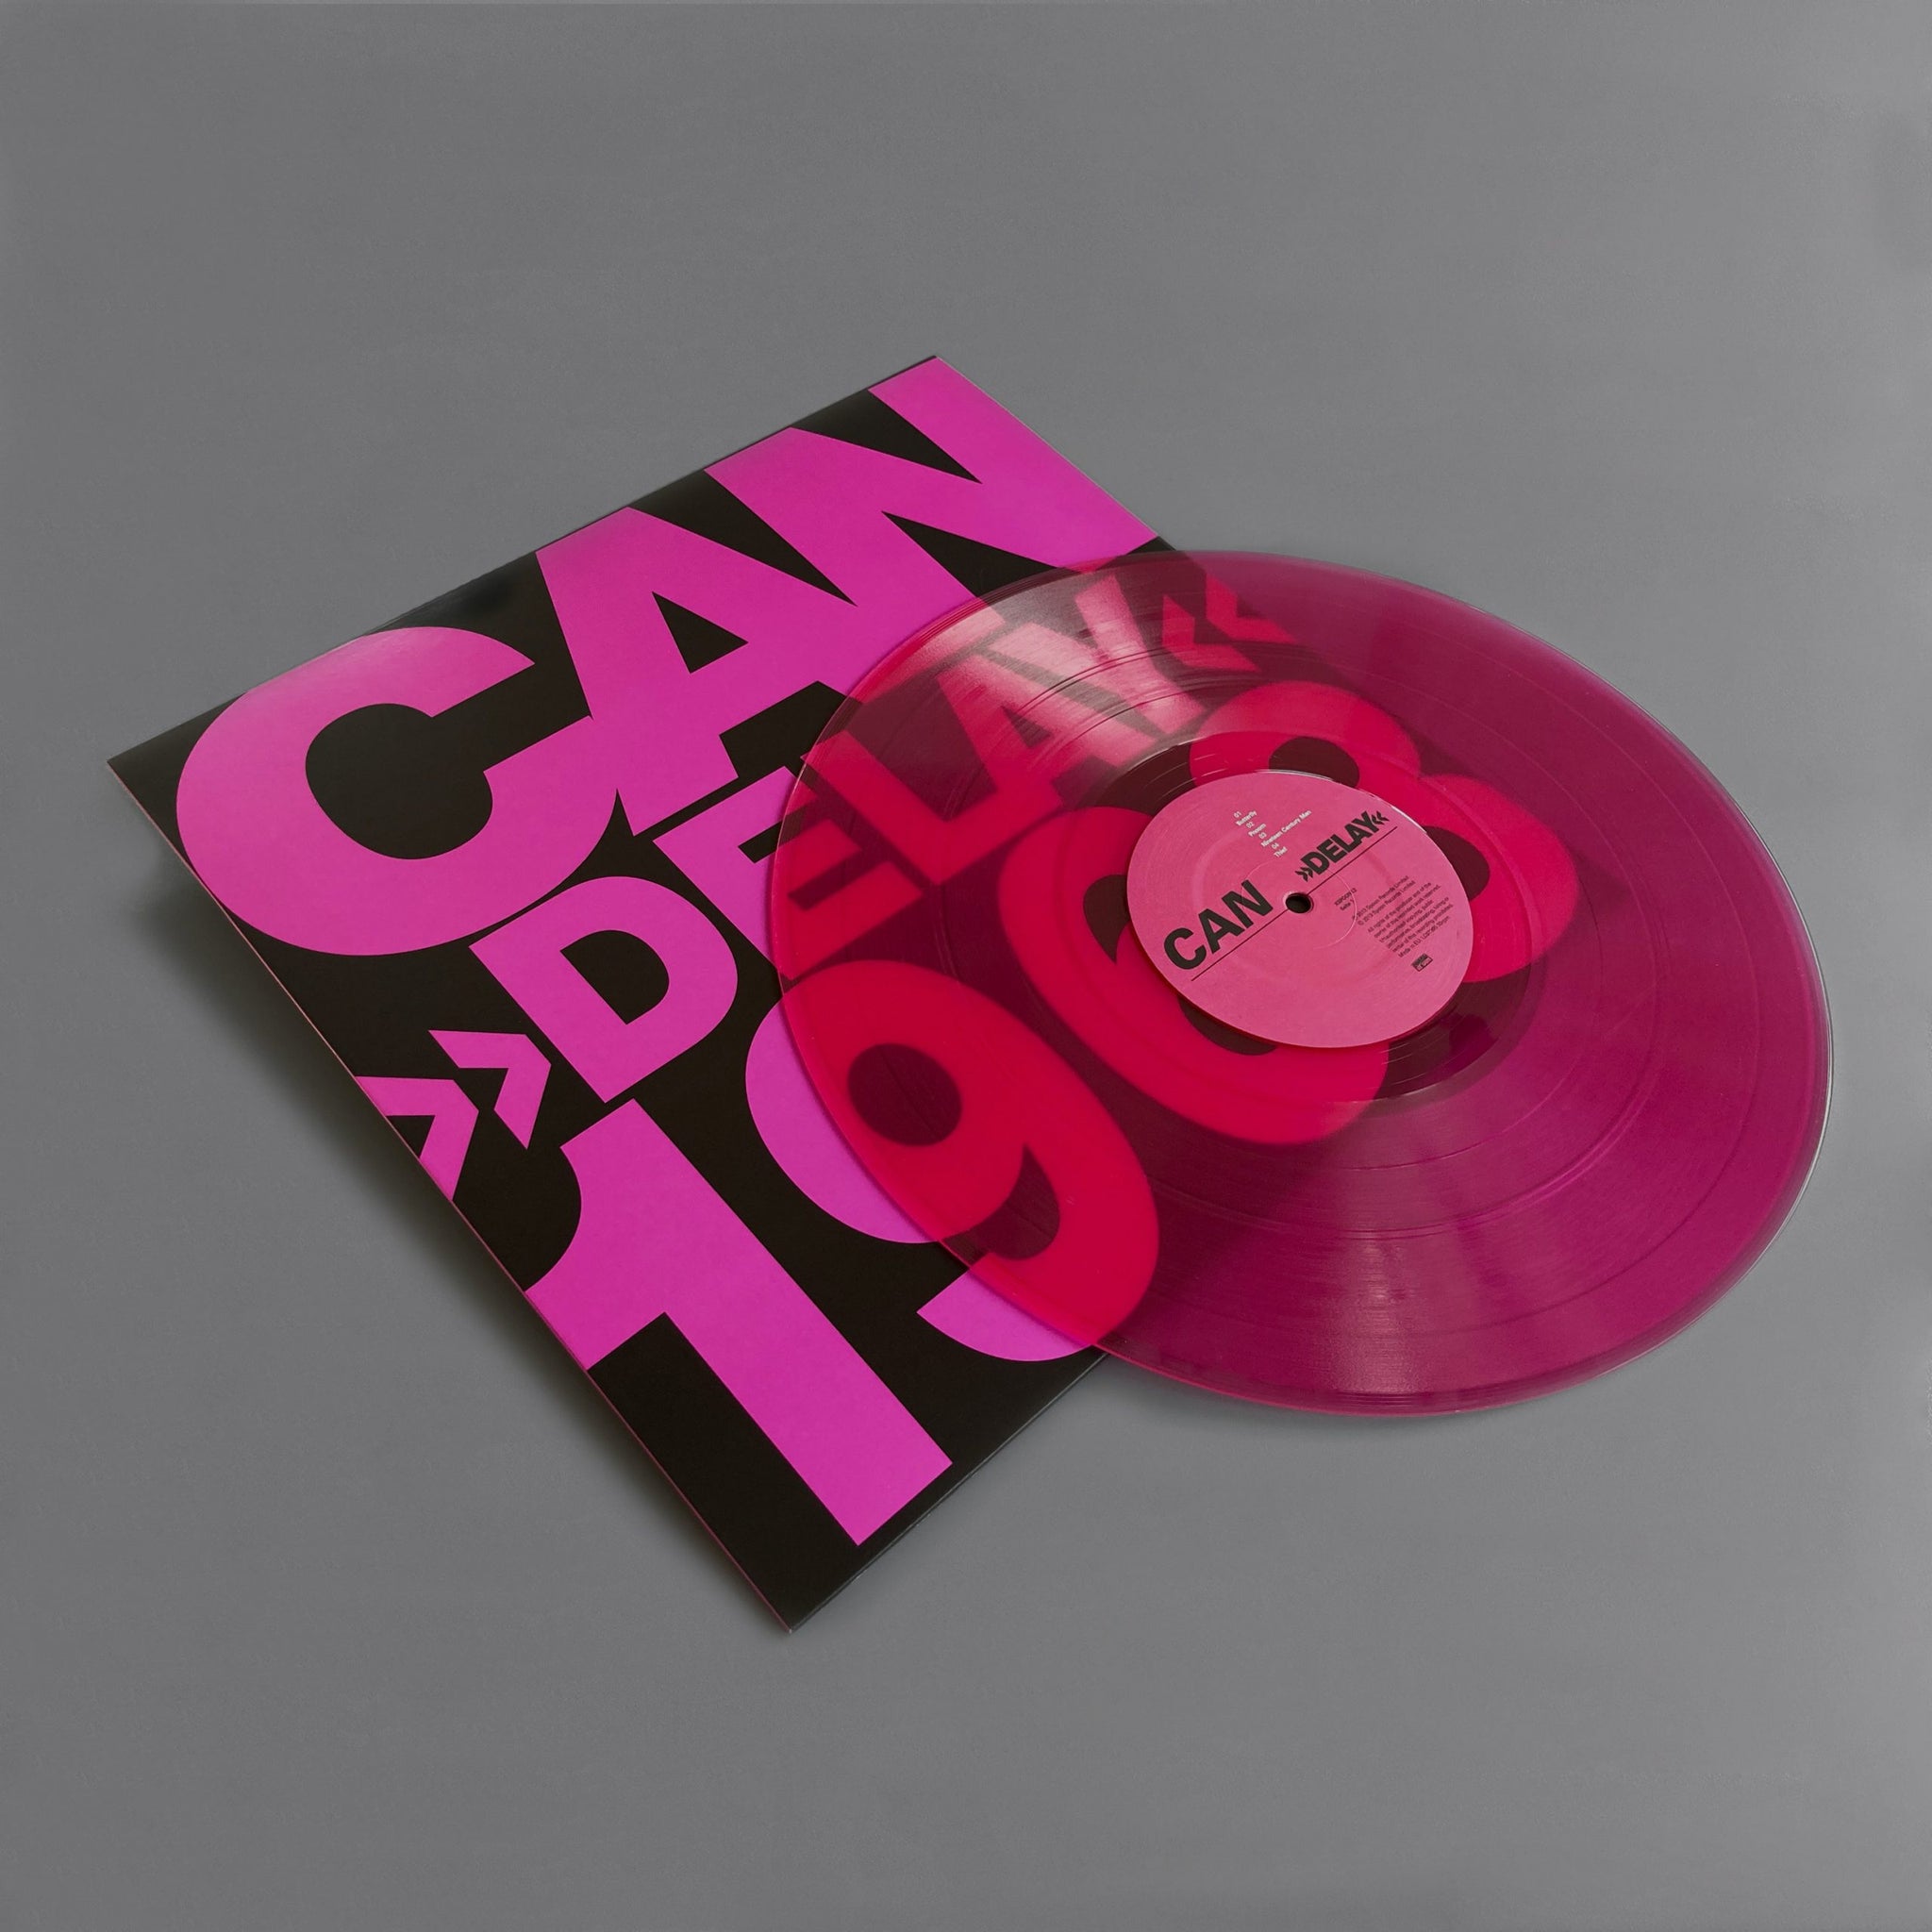 CAN - Delay 1968 - LP - Pink Vinyl